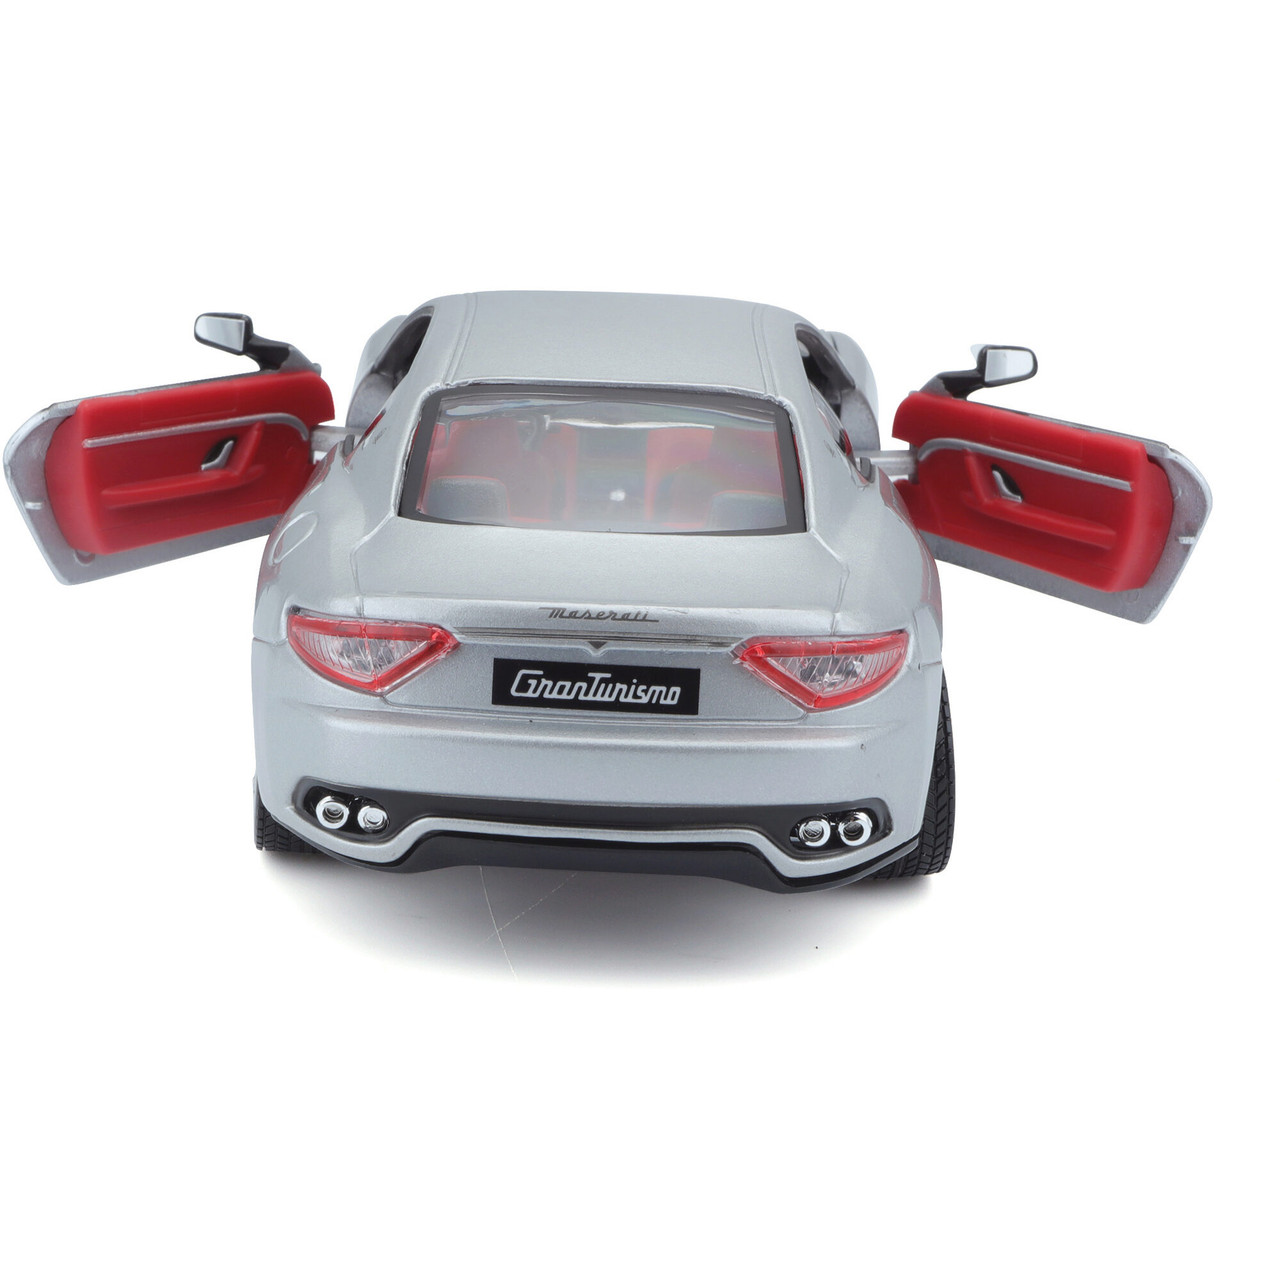 Academy Burago Model Kit 1/24 Scale Maserati Granturismo 15125 for sale online 